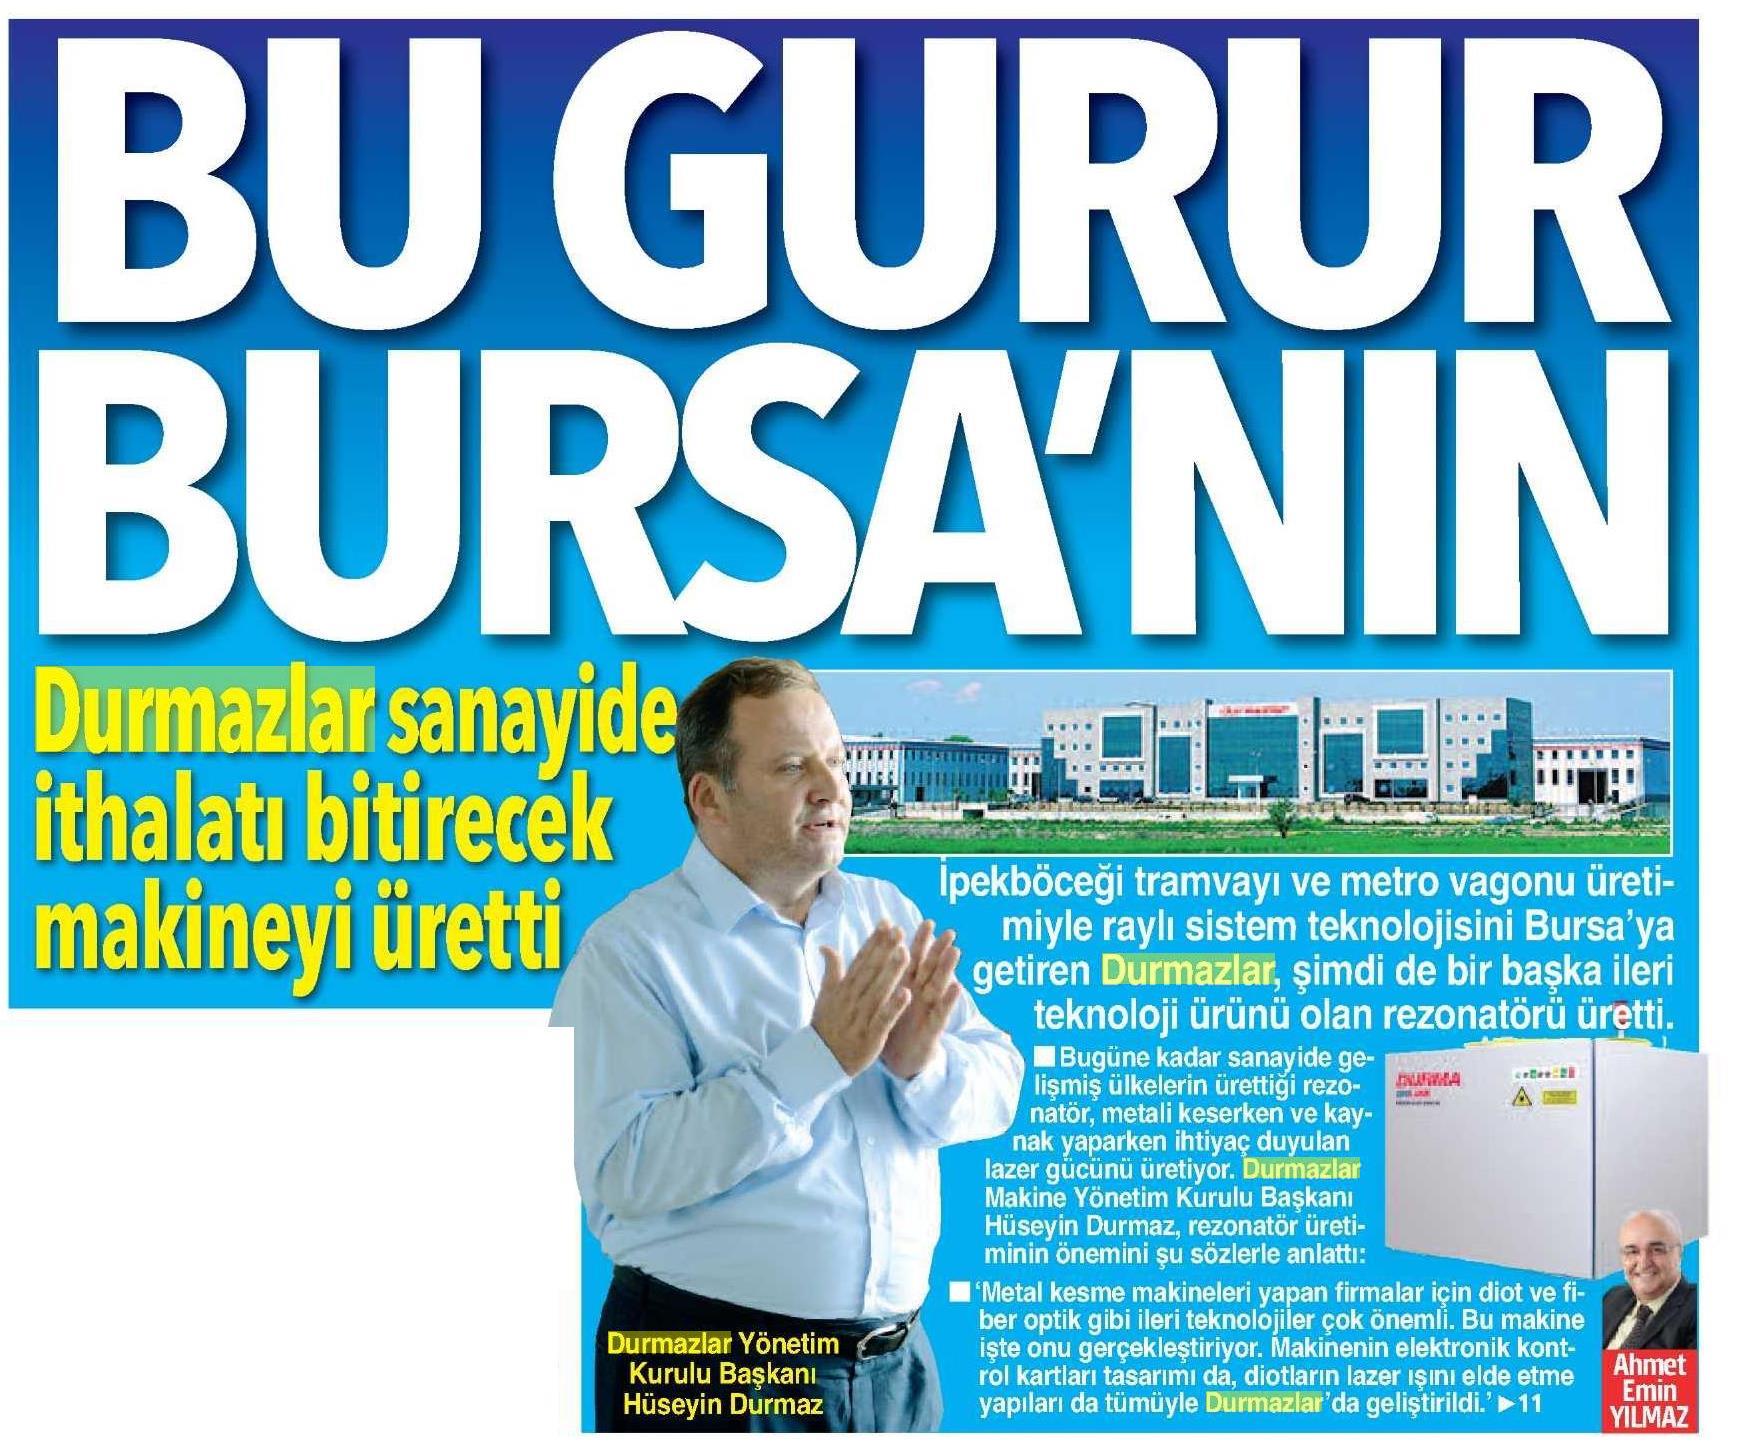 This Pride of Bursa